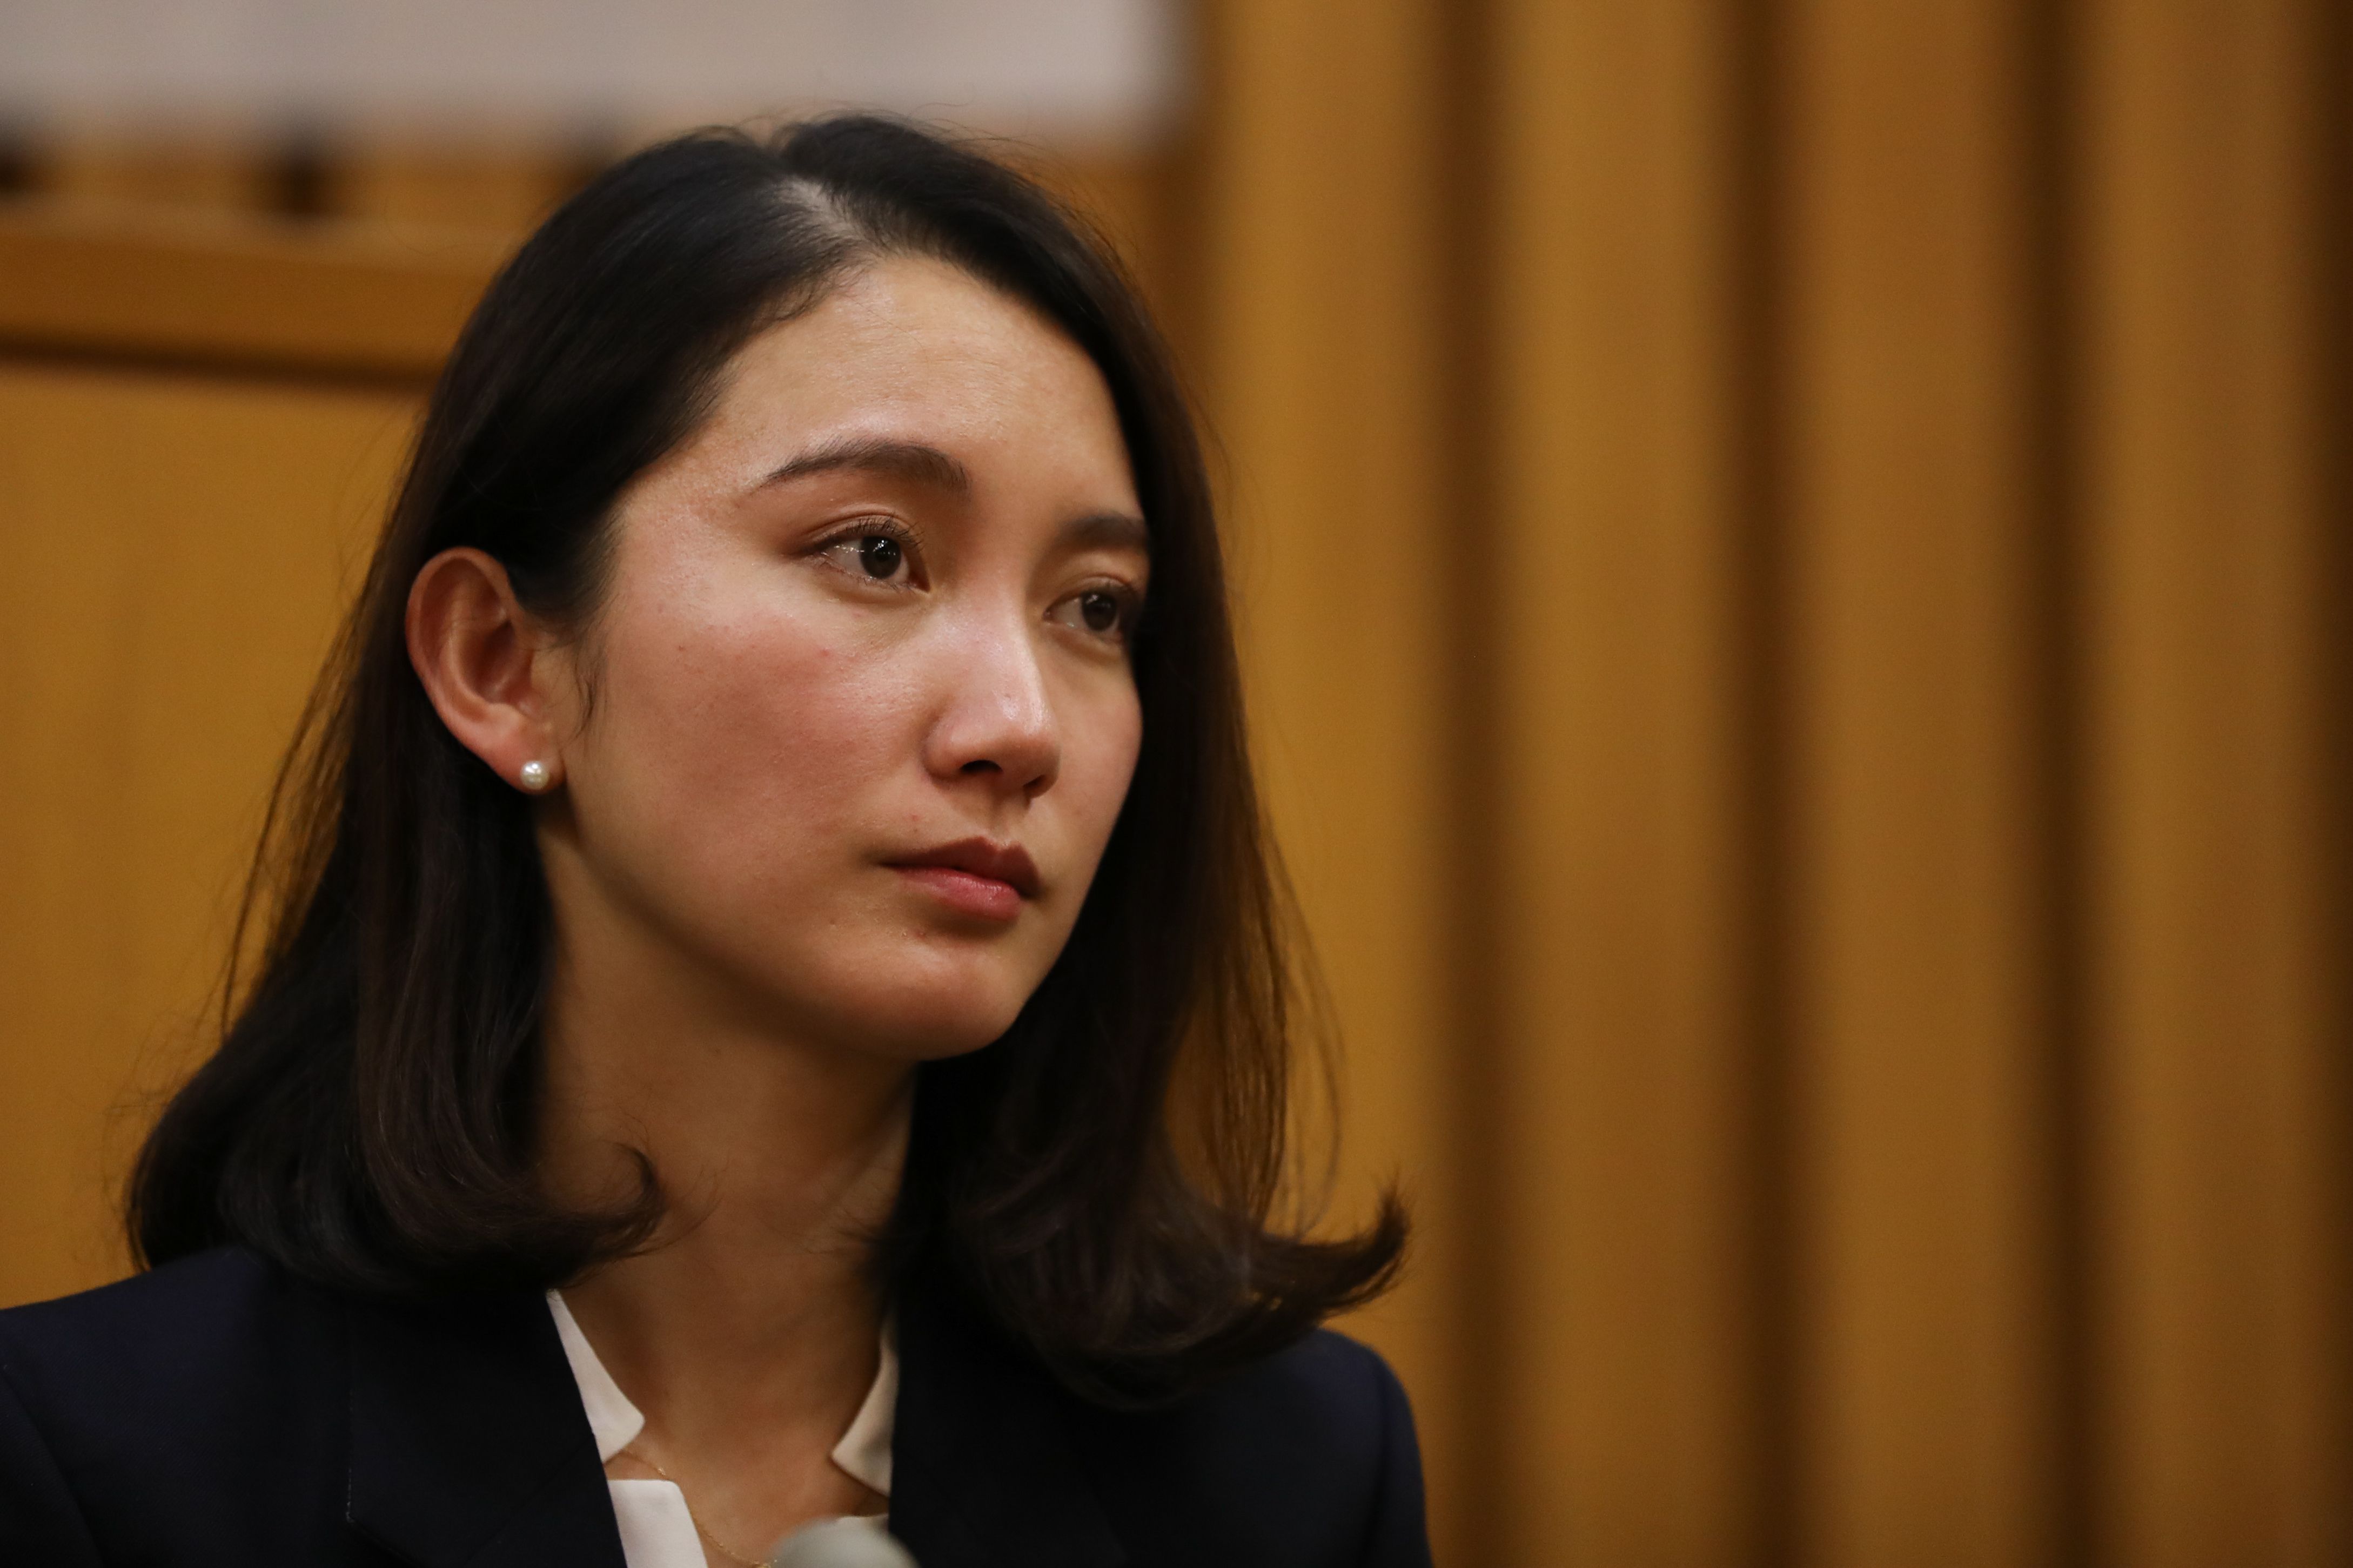 Little Sister Rape Blackmale Sex - Shiori Ito won civil case against her alleged rapist. But Japan's rape laws  need overhaul, campaigners say | CNN